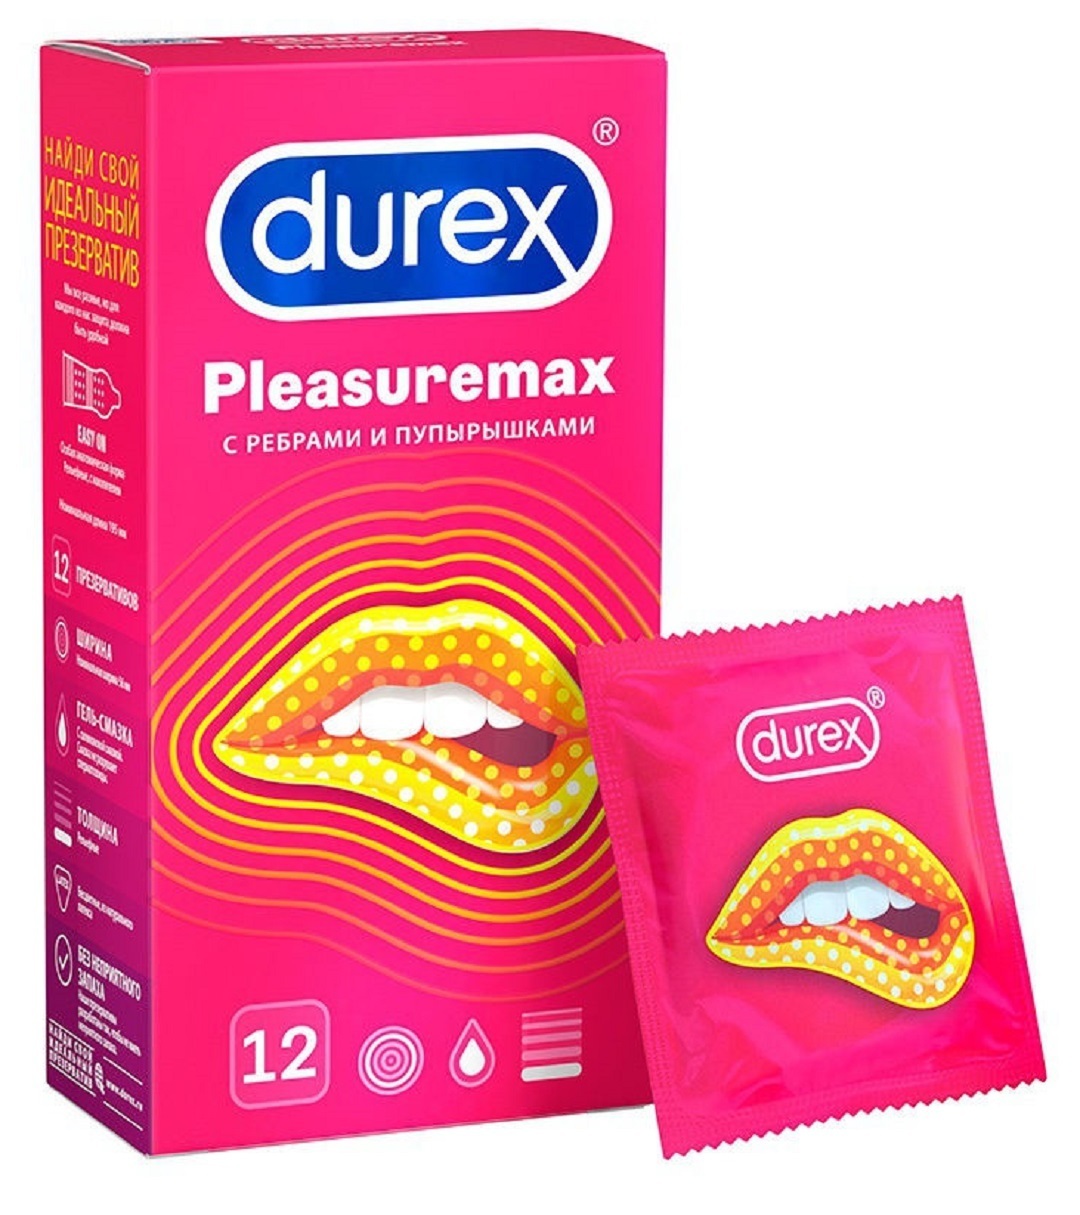 Durex Pleasuremax Презервативы с ребрами и пупырышками, 12 шт —  .